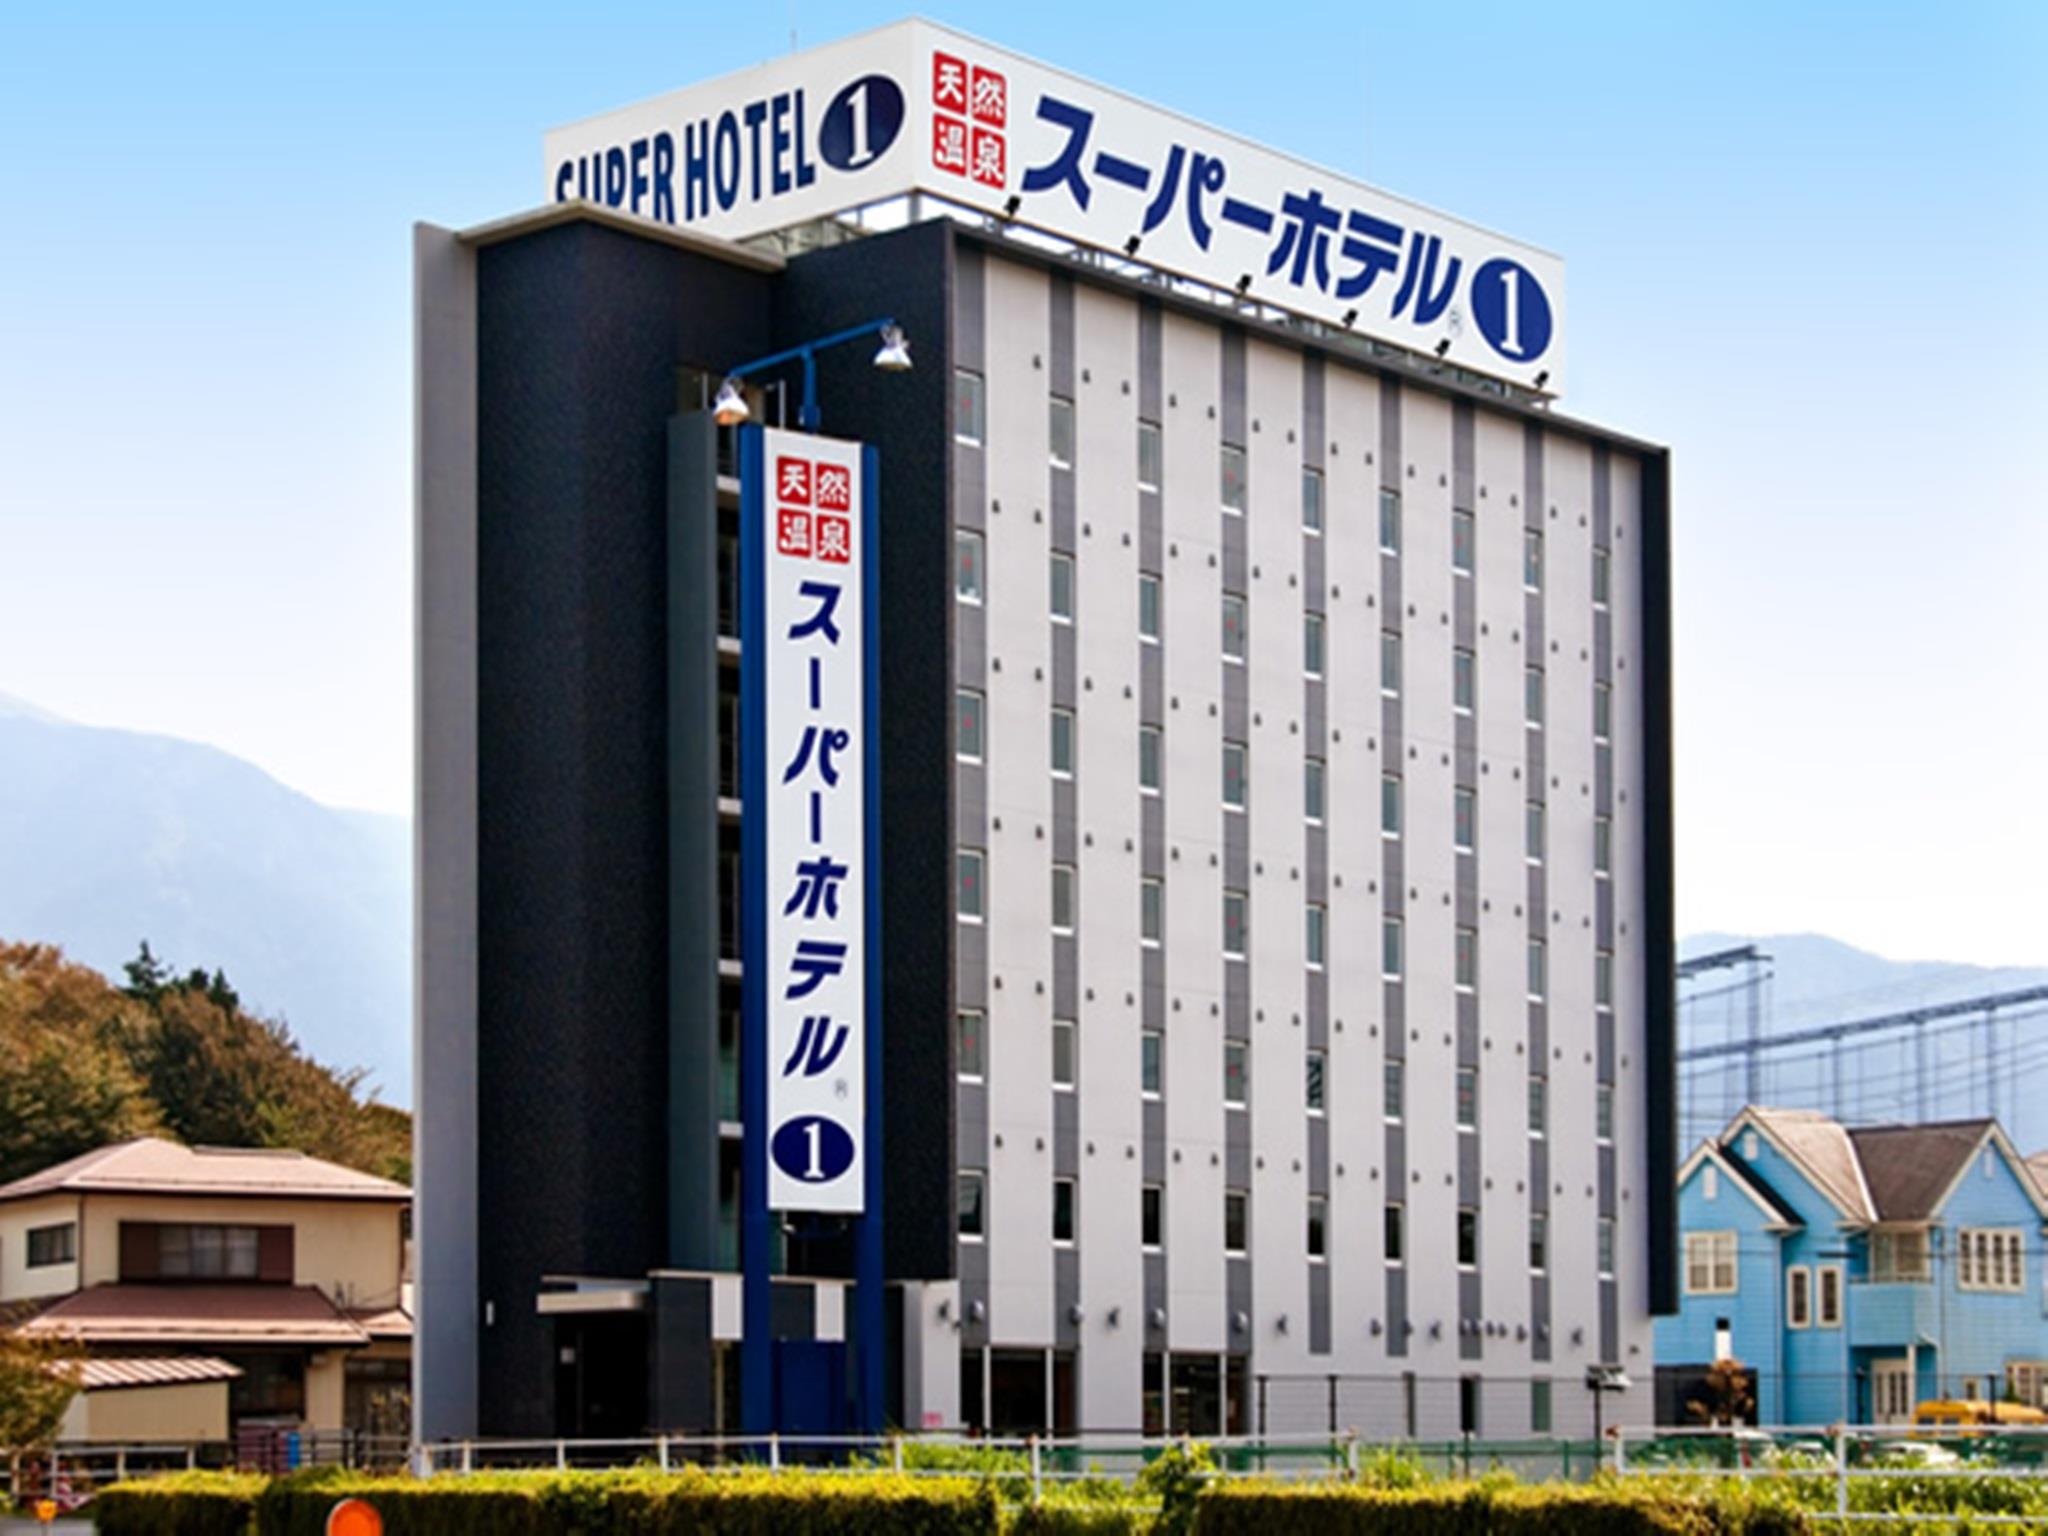 Super Hotel Gotenba - 1 image 1